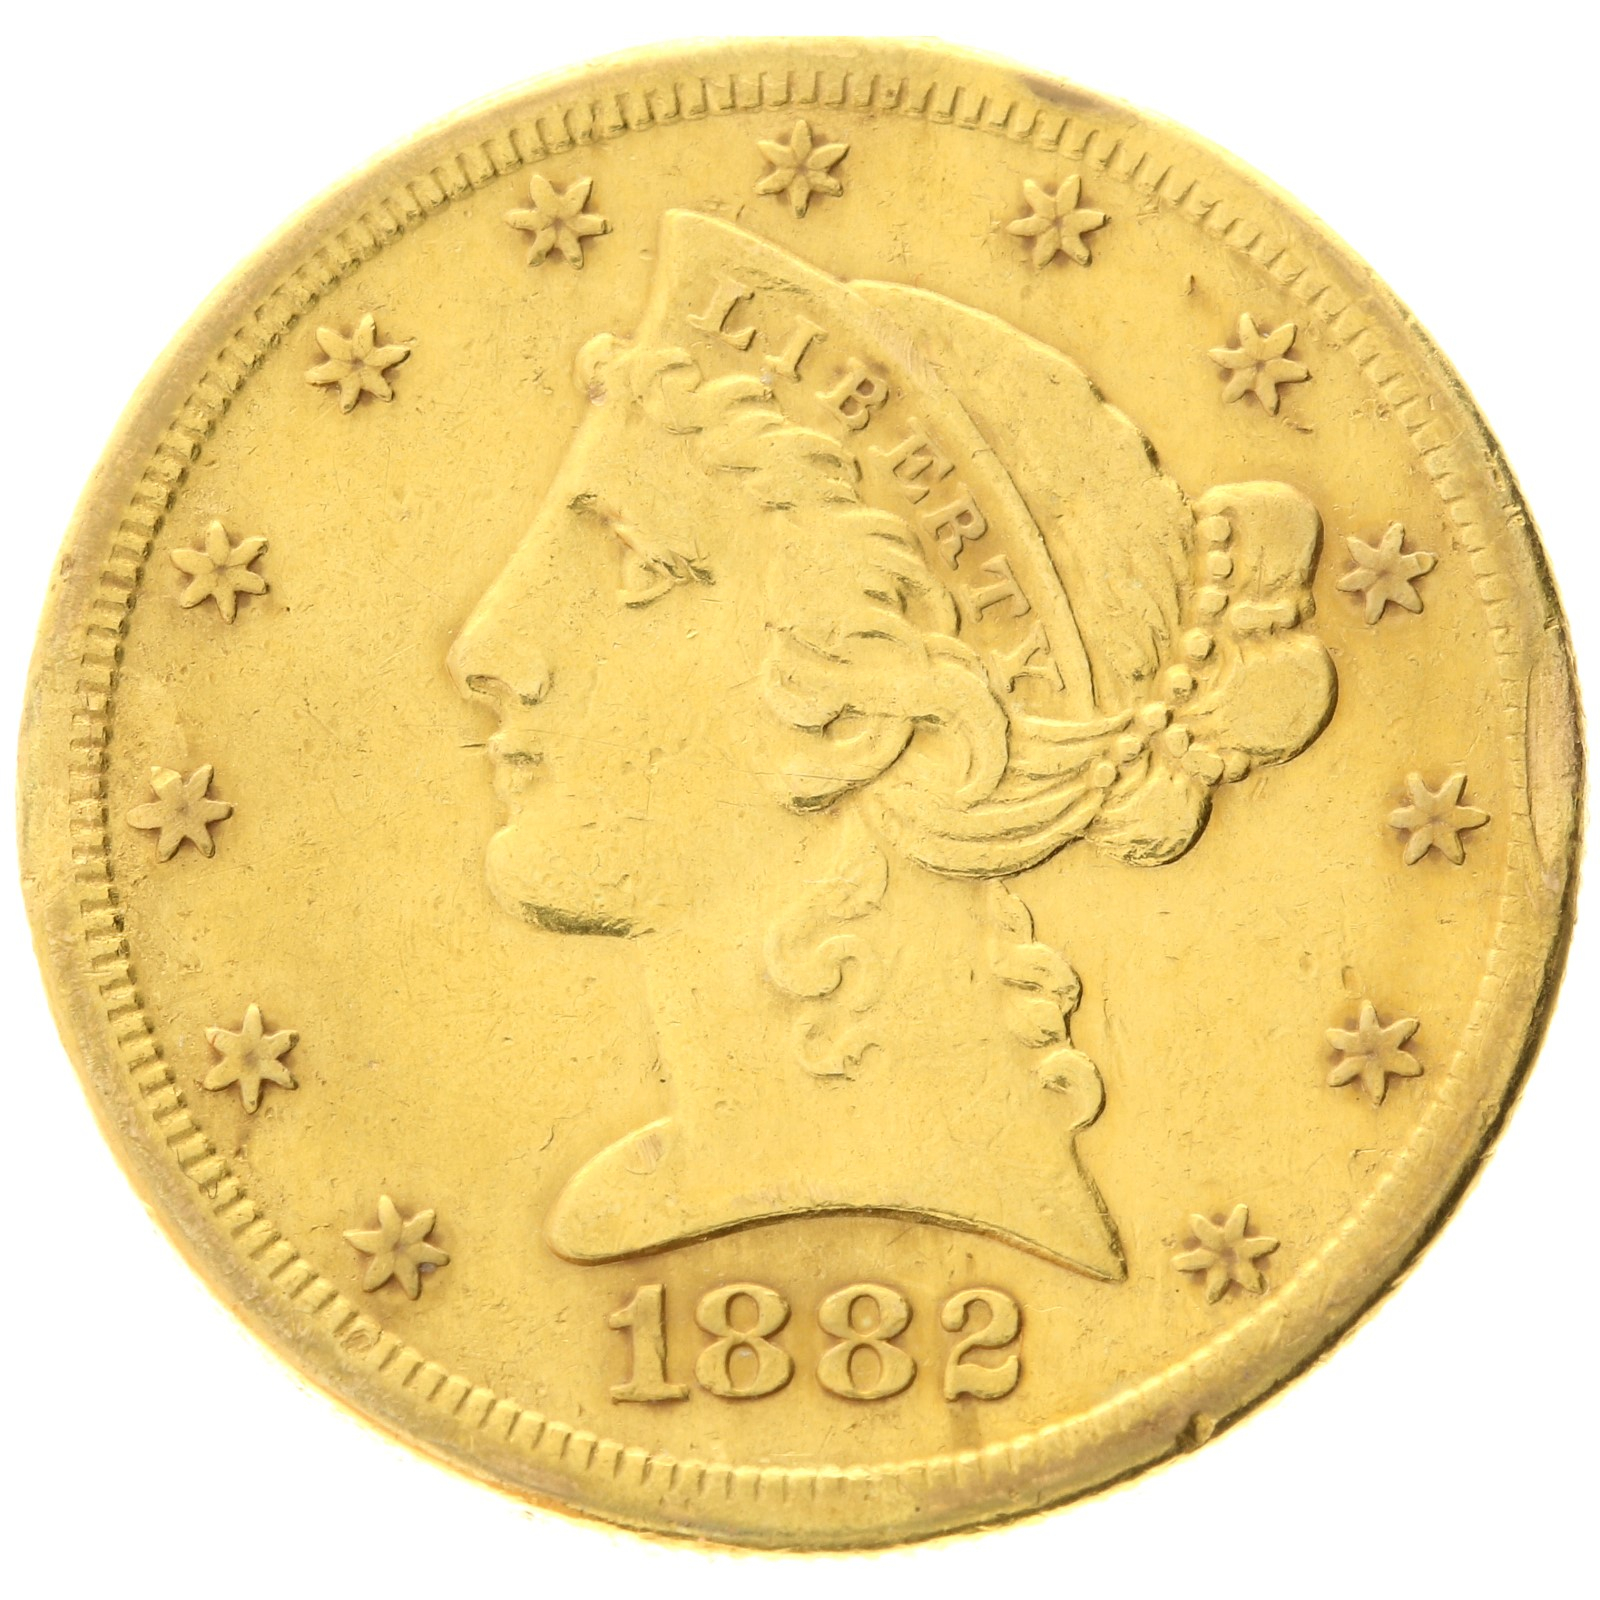 USA - 5 dollars - 1882 - S - Liberty / Coronet Head